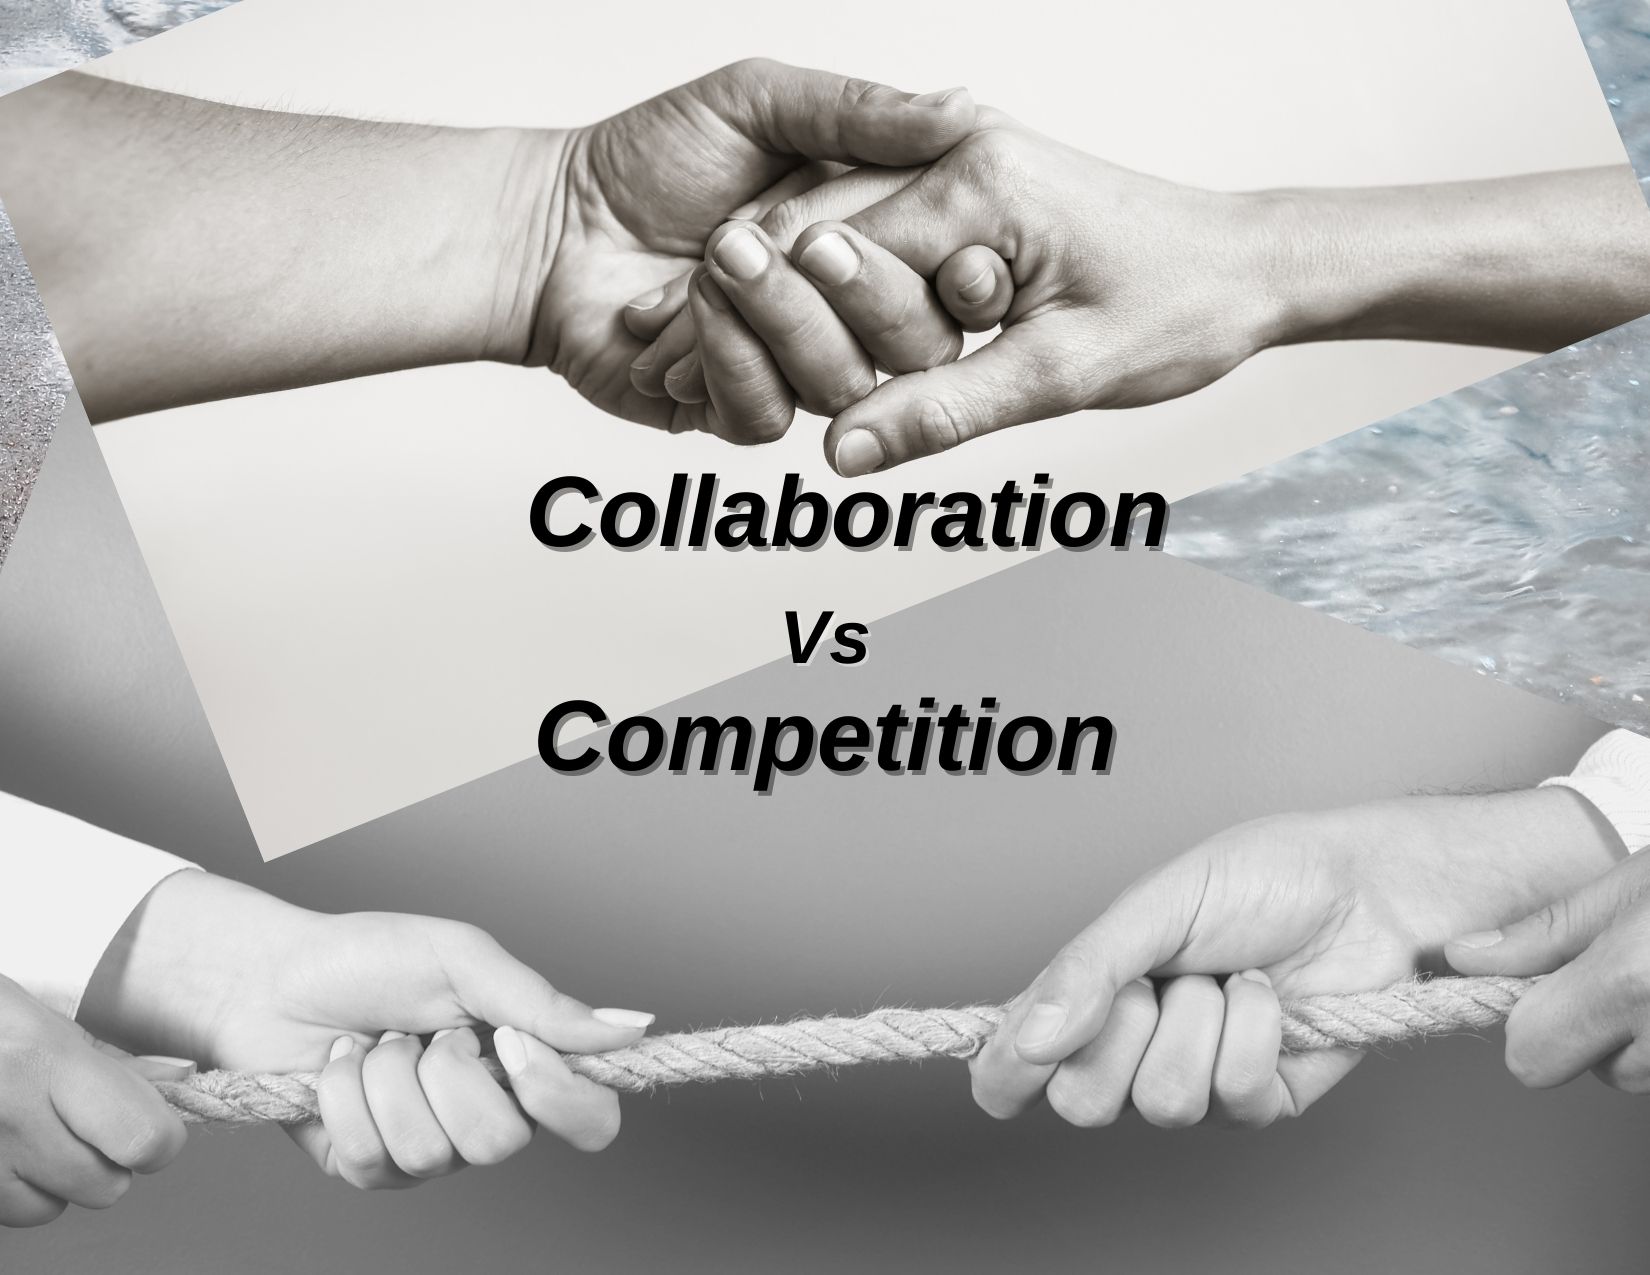 competition vs collaboration essay